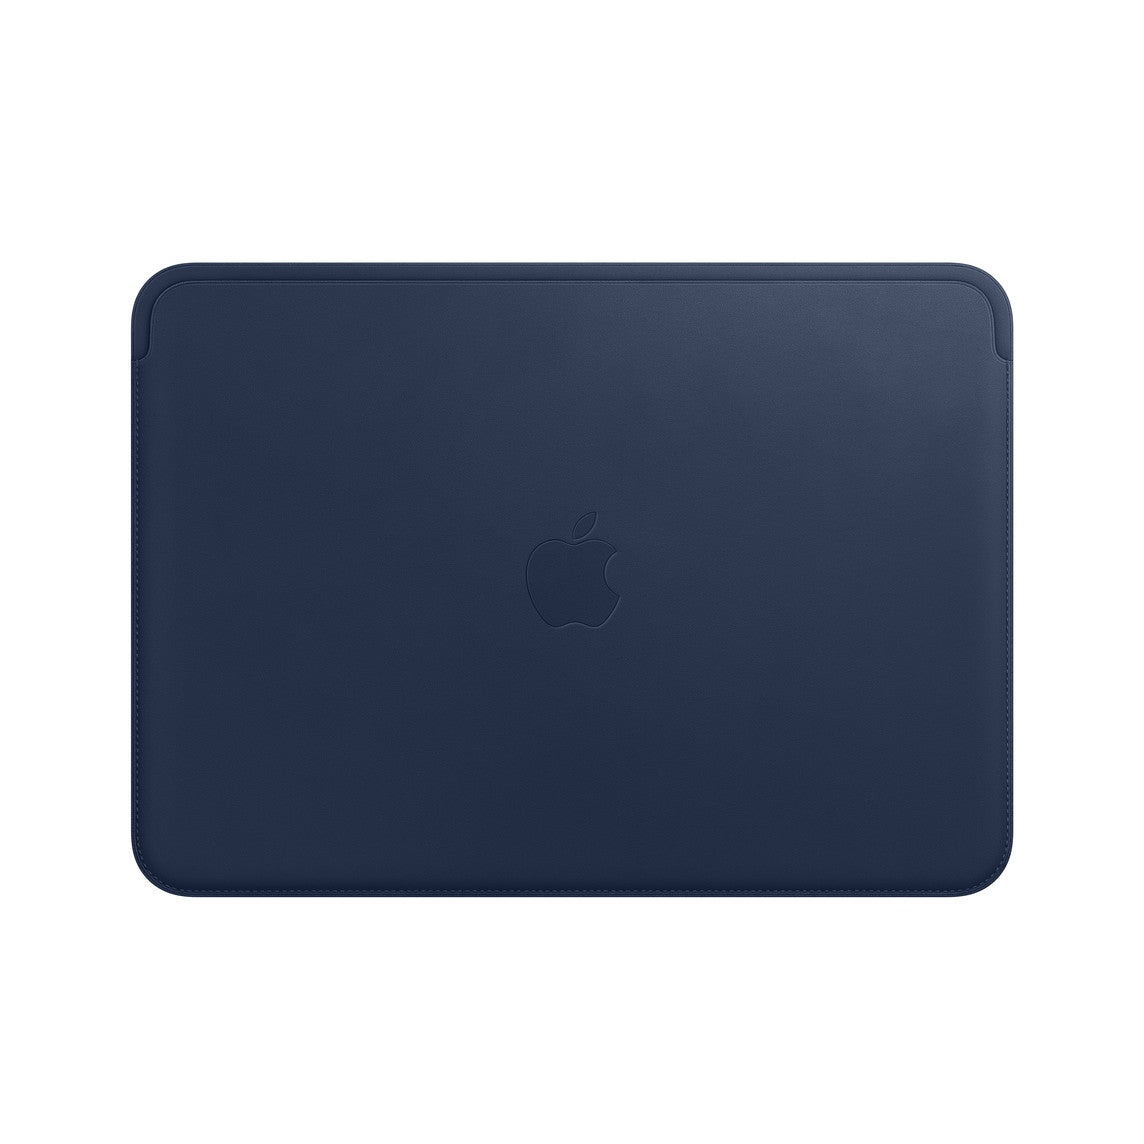 Apple MacBook Pro 16 Leather Sleeve - Midnight Blue Blue New - Sealed